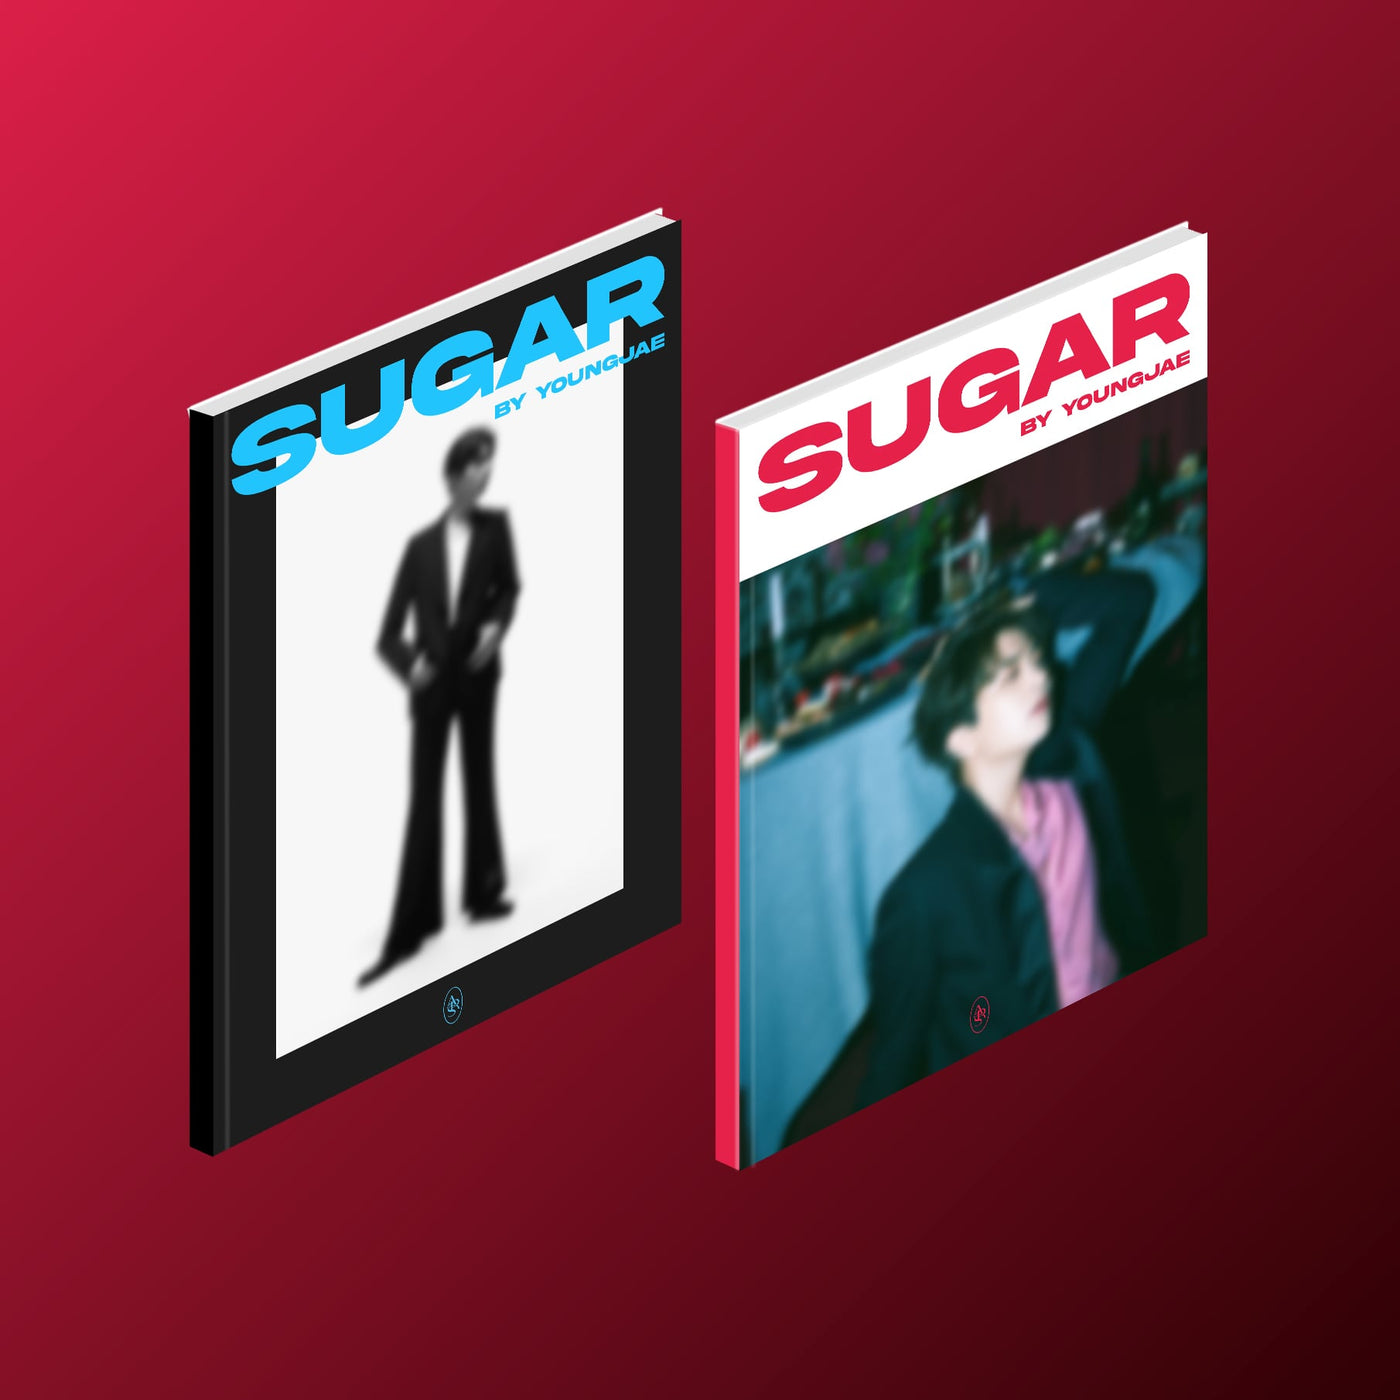 Youngjae (GOT7) 2nd Mini Album [Sugar] (Black ver. / Red ver.) 🇰🇷